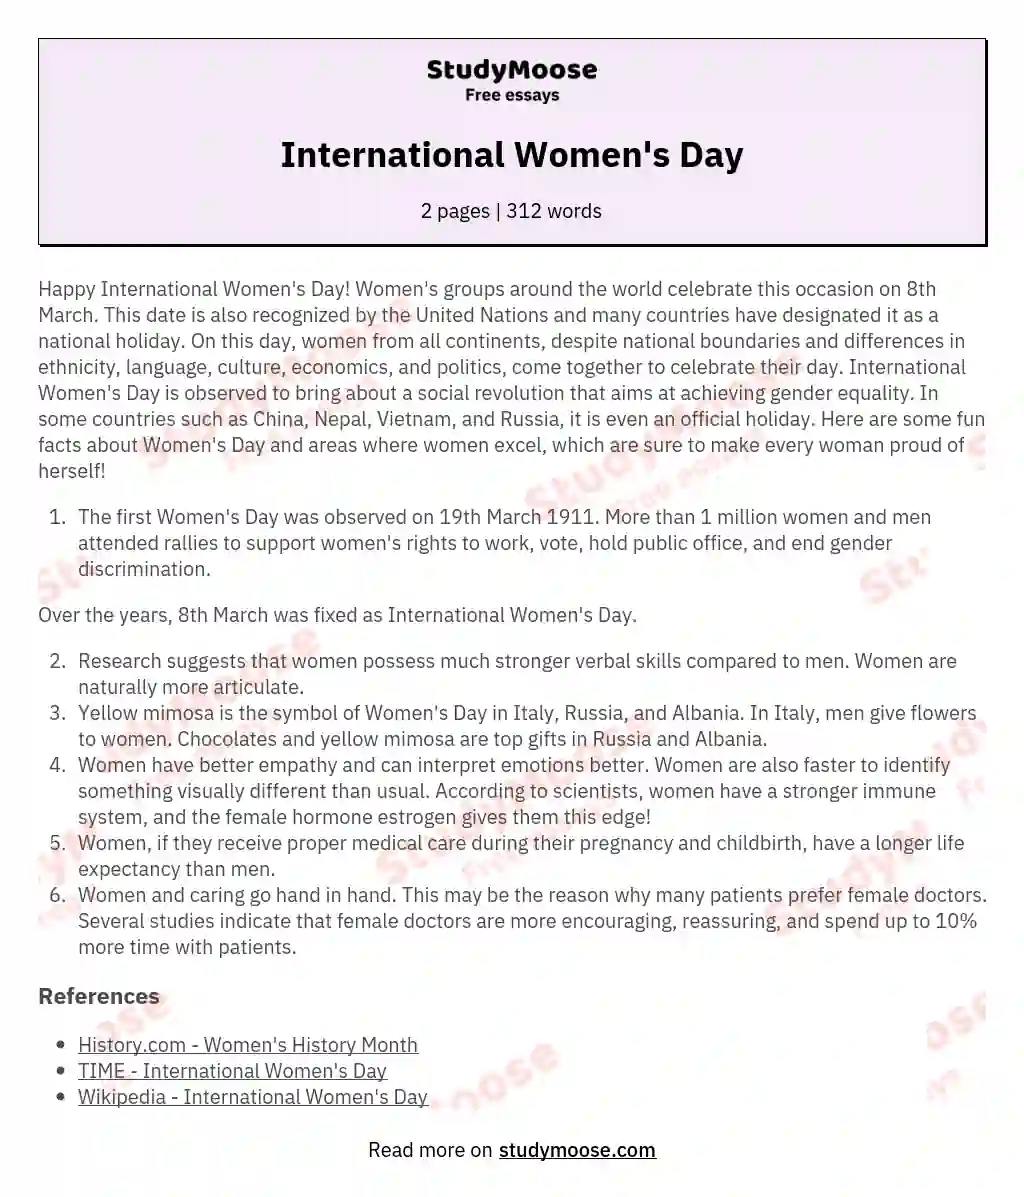 International Women's Day essay